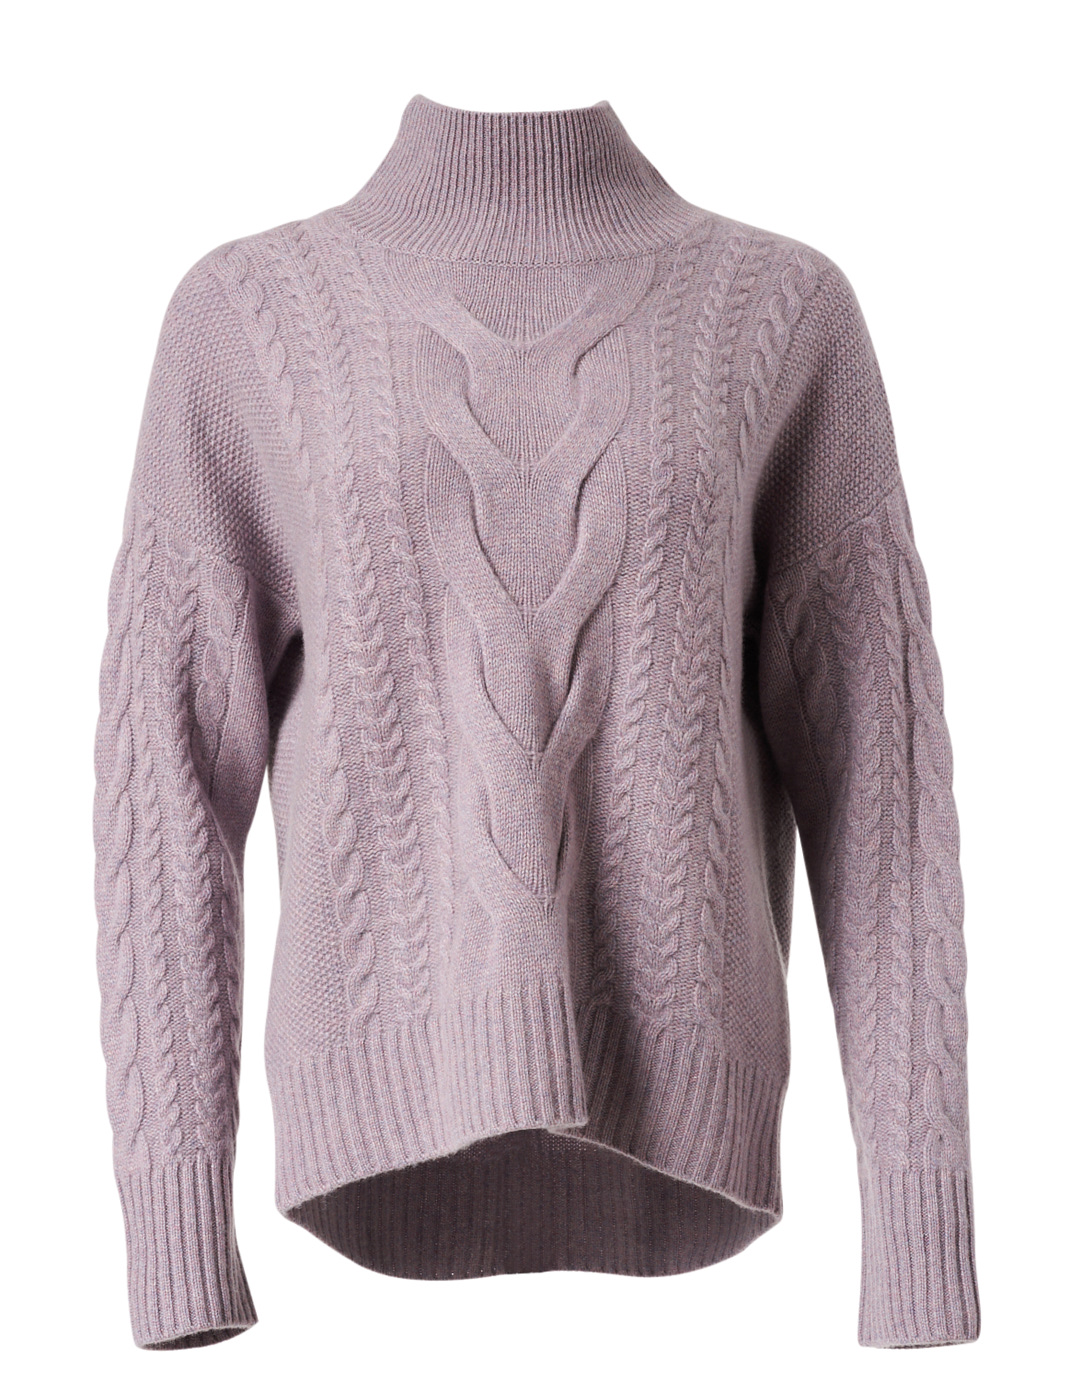 Opal Lavender Cashmere Cable Knit Sweater | Repeat Cashmere | Halsbrook